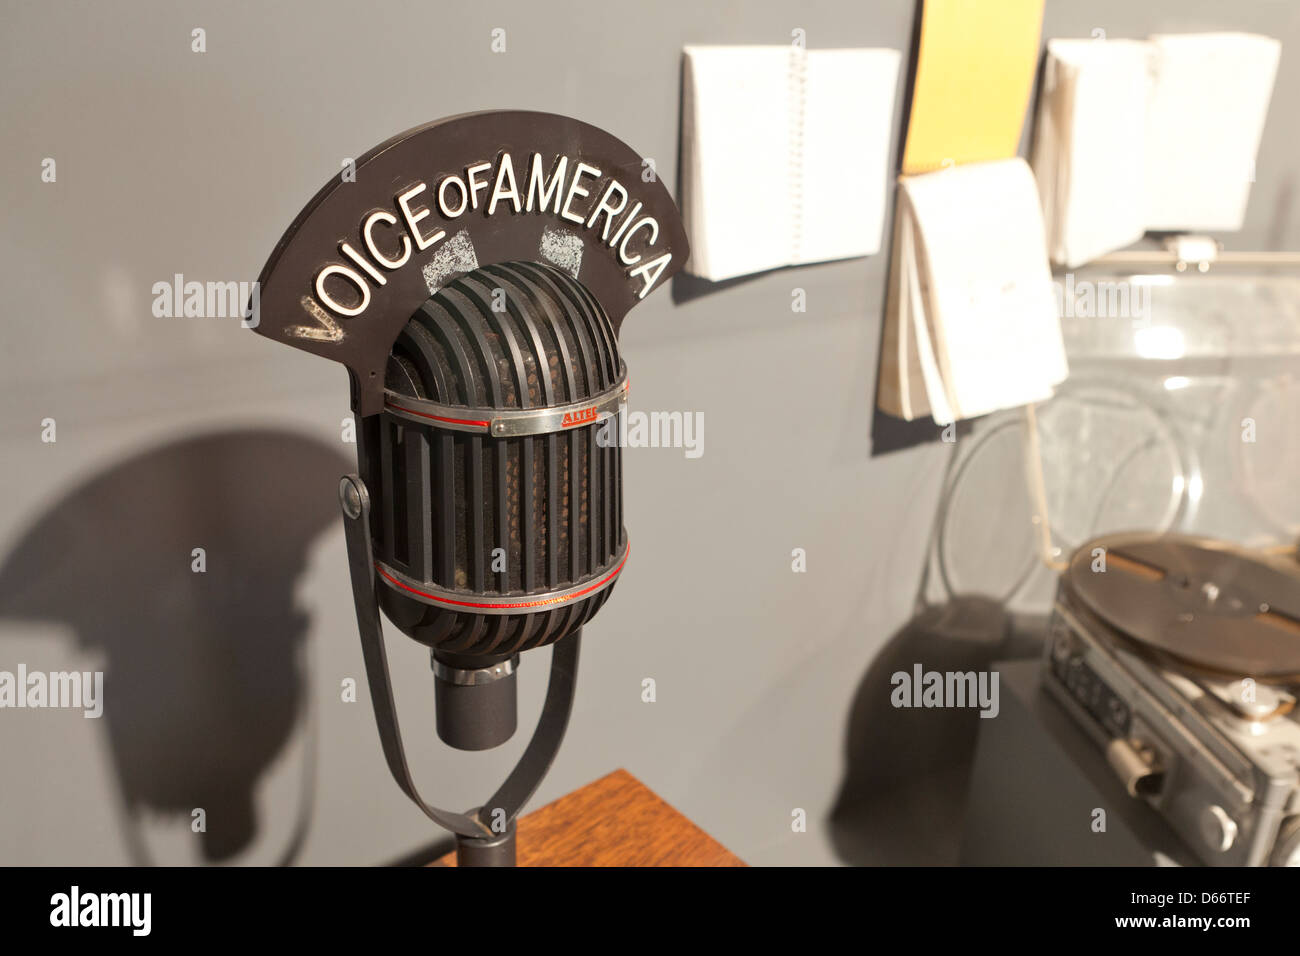 Antique Voice of America mic broadcast Foto Stock